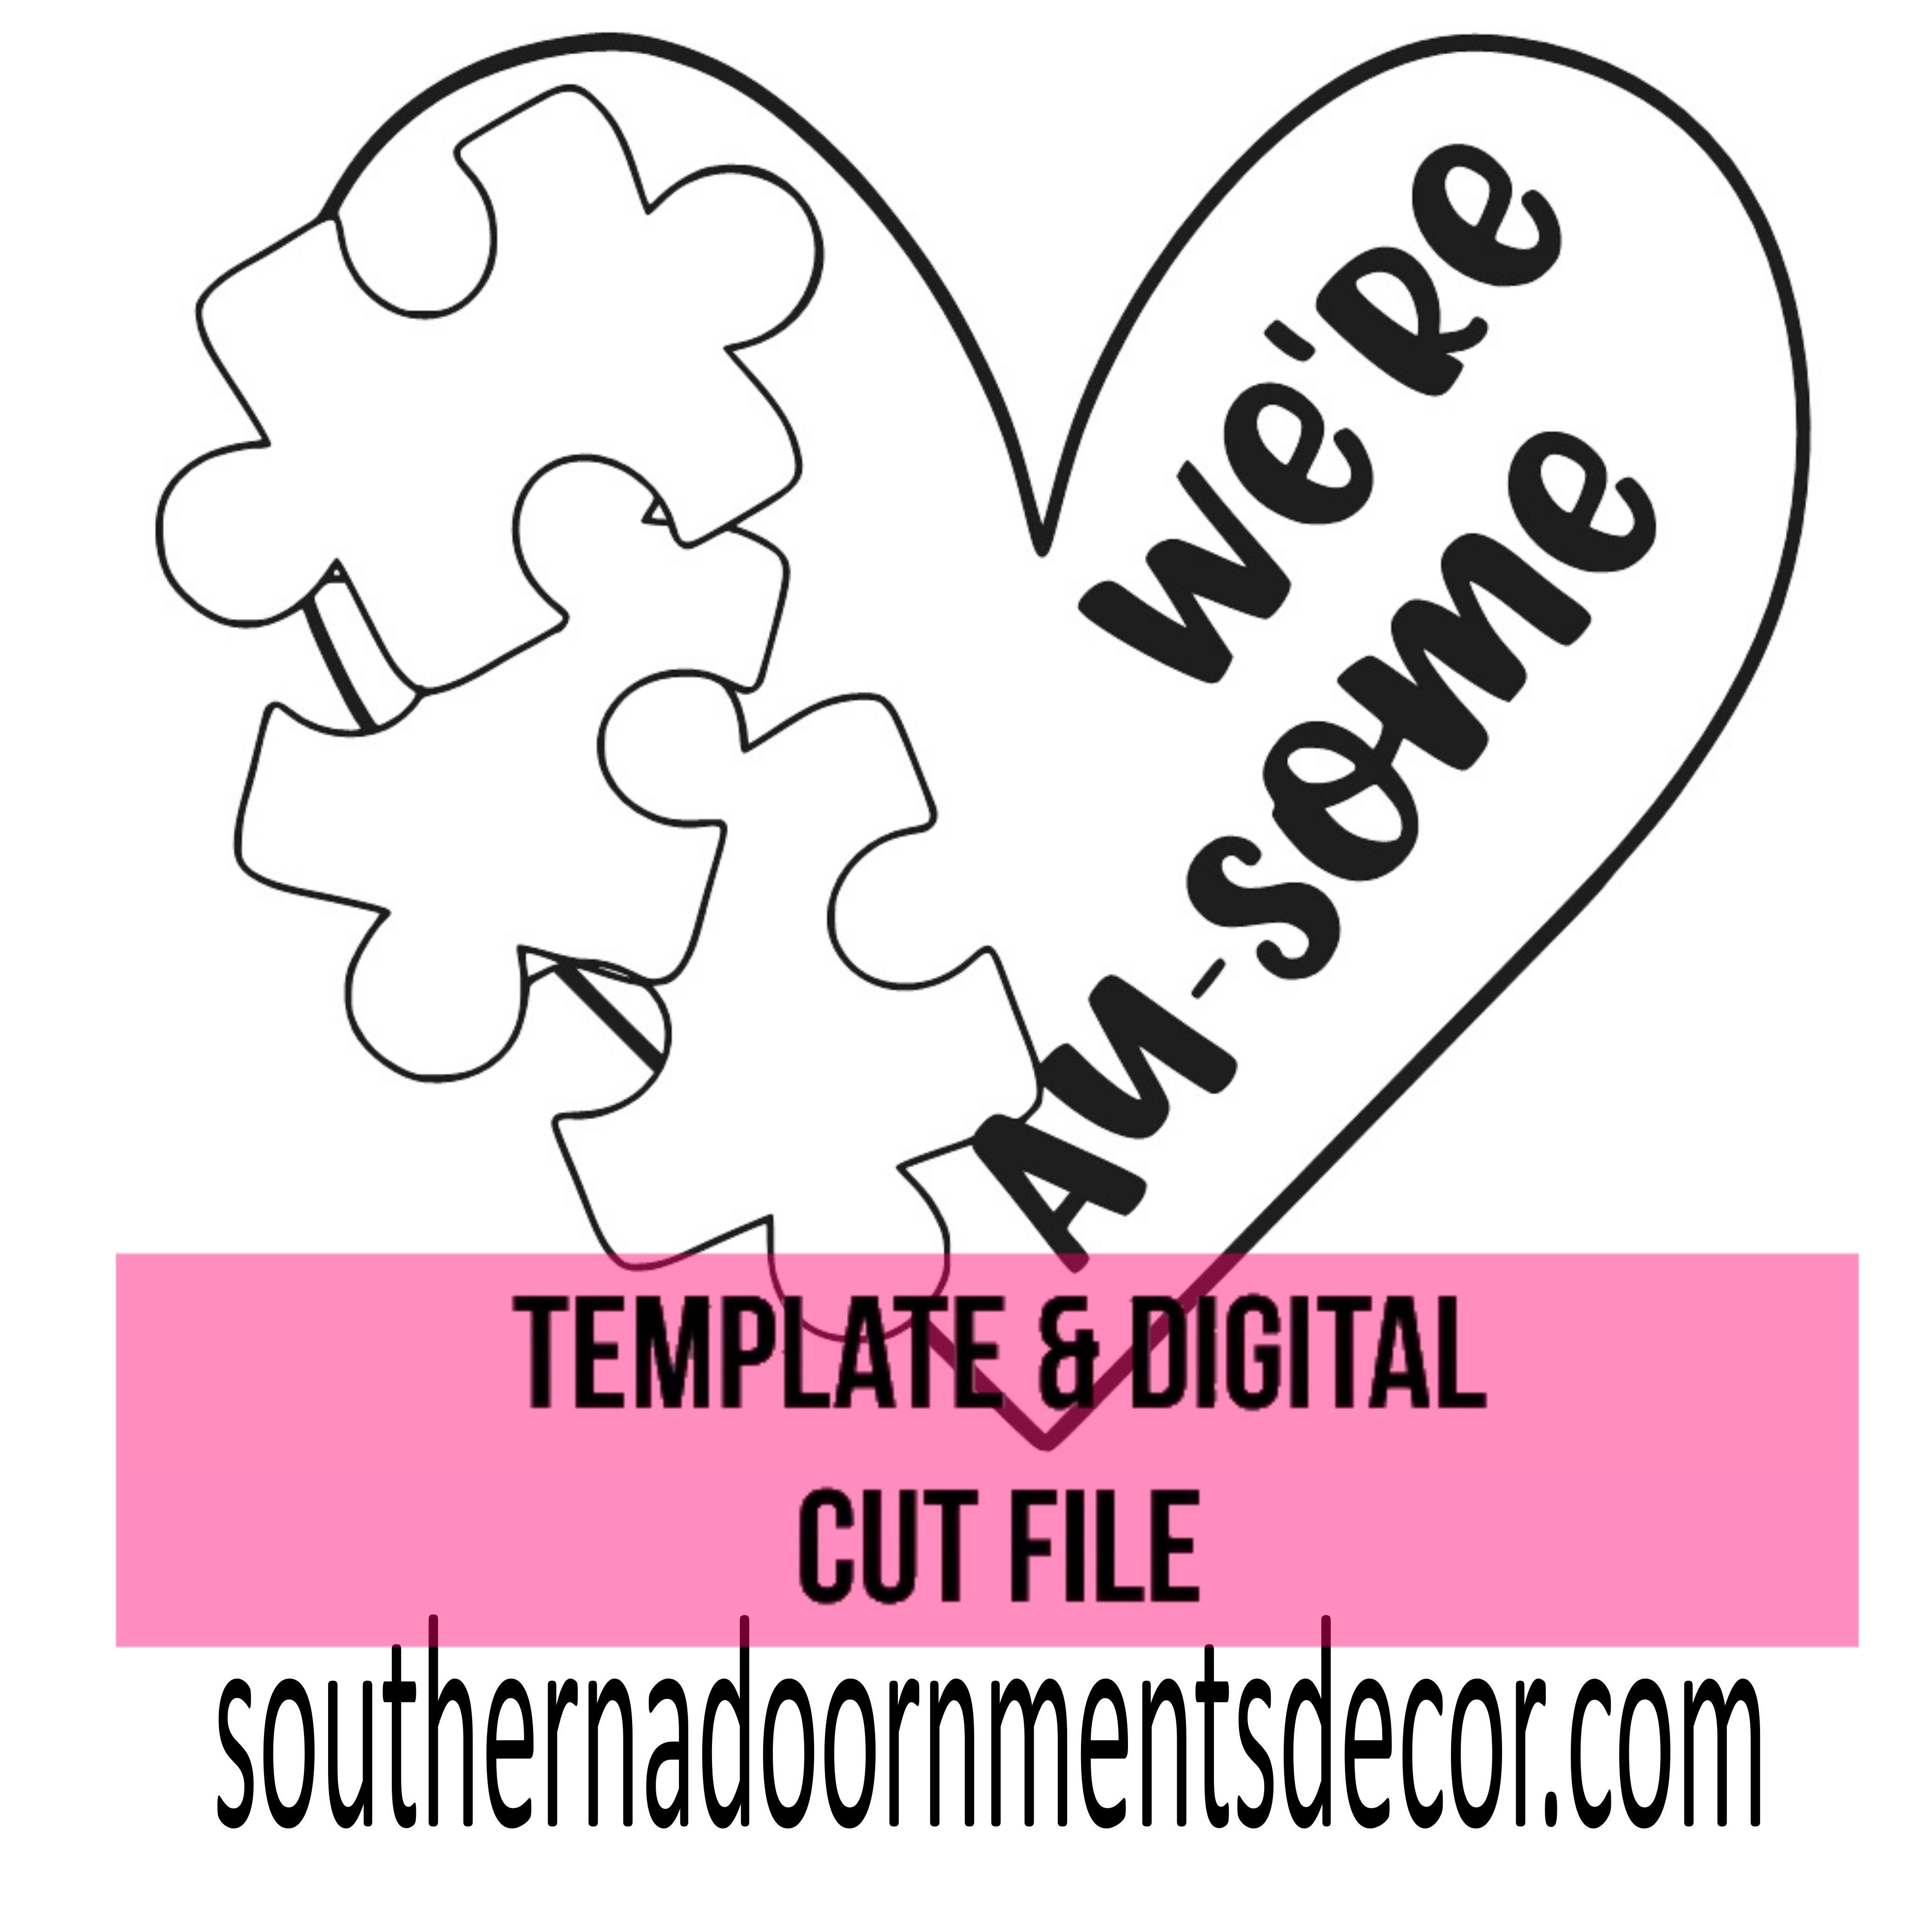 We're Au-some Template & Digital Cut File